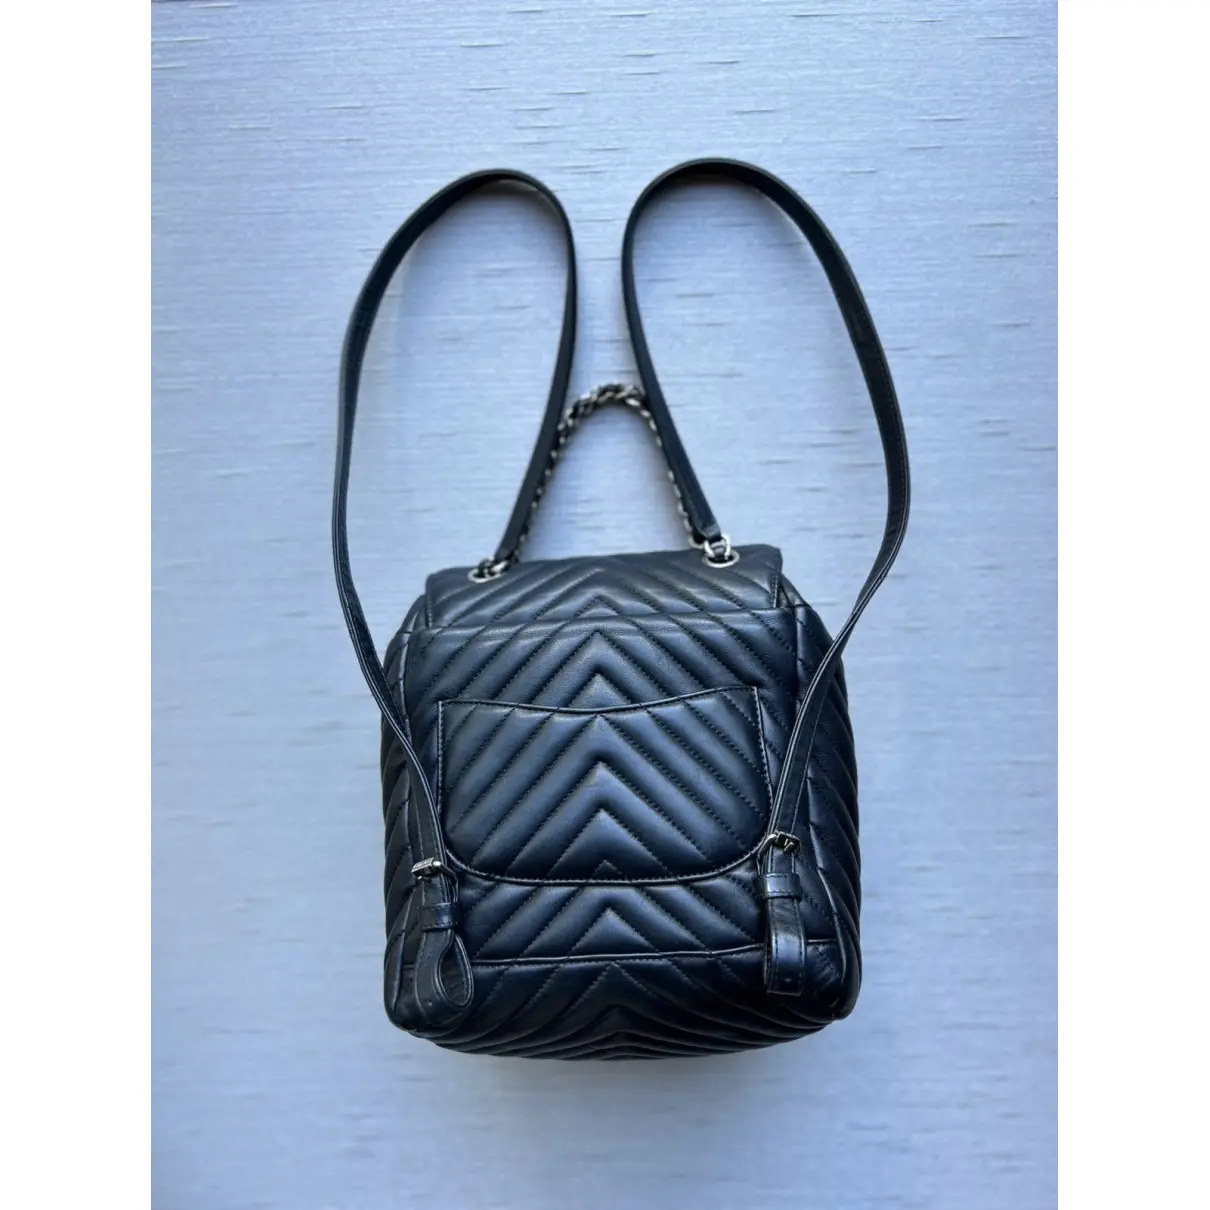 Buy Chanel Urban Spirit leather backpack online